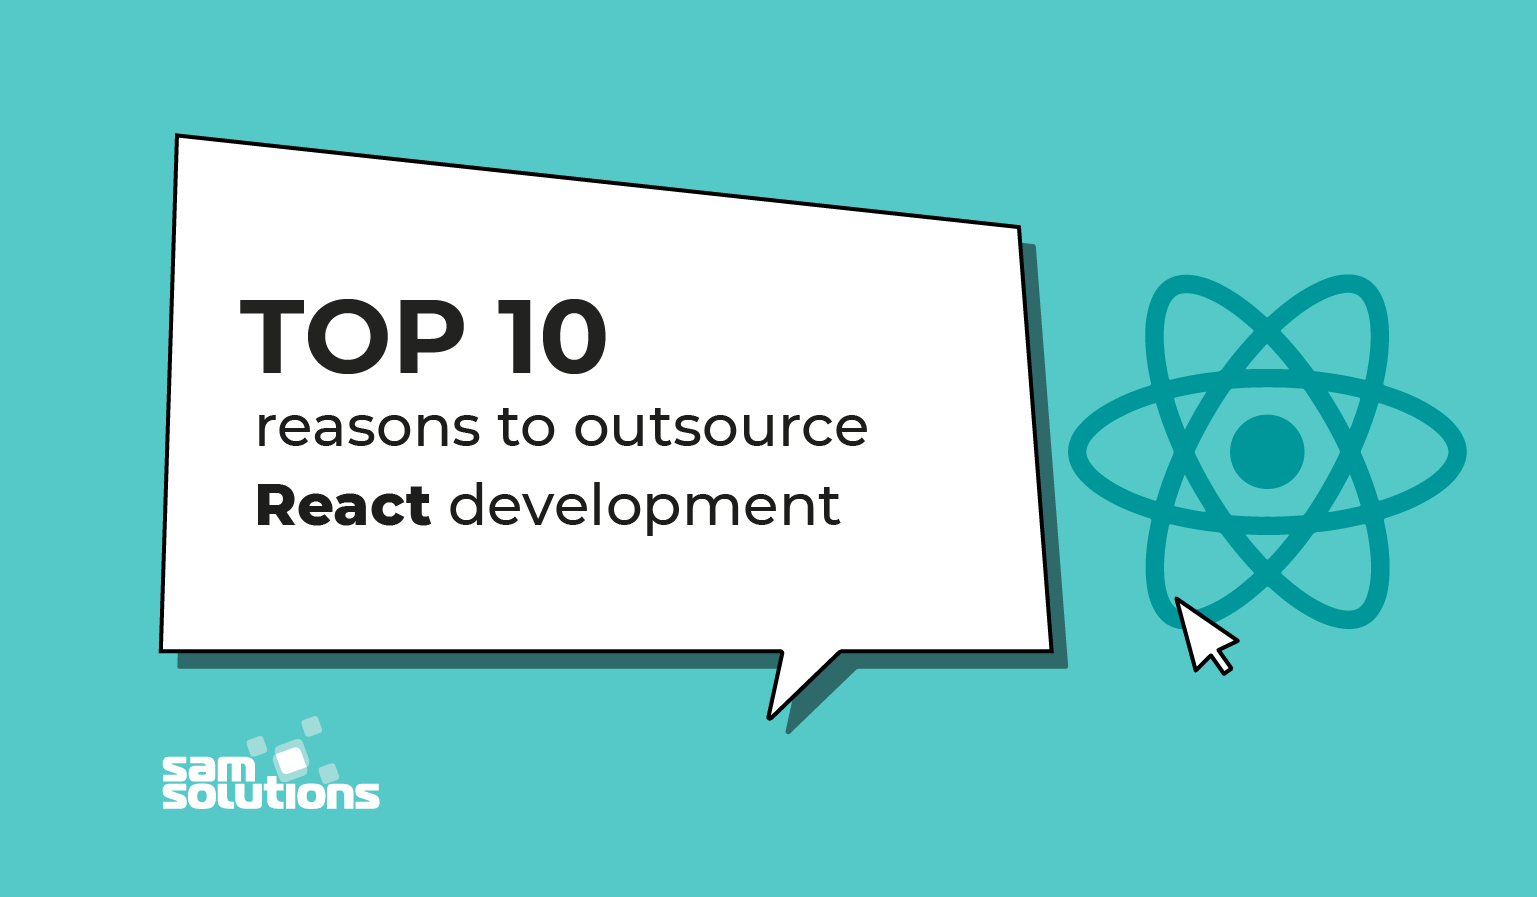 TOP 10 reasons to outsource react development@2x-min